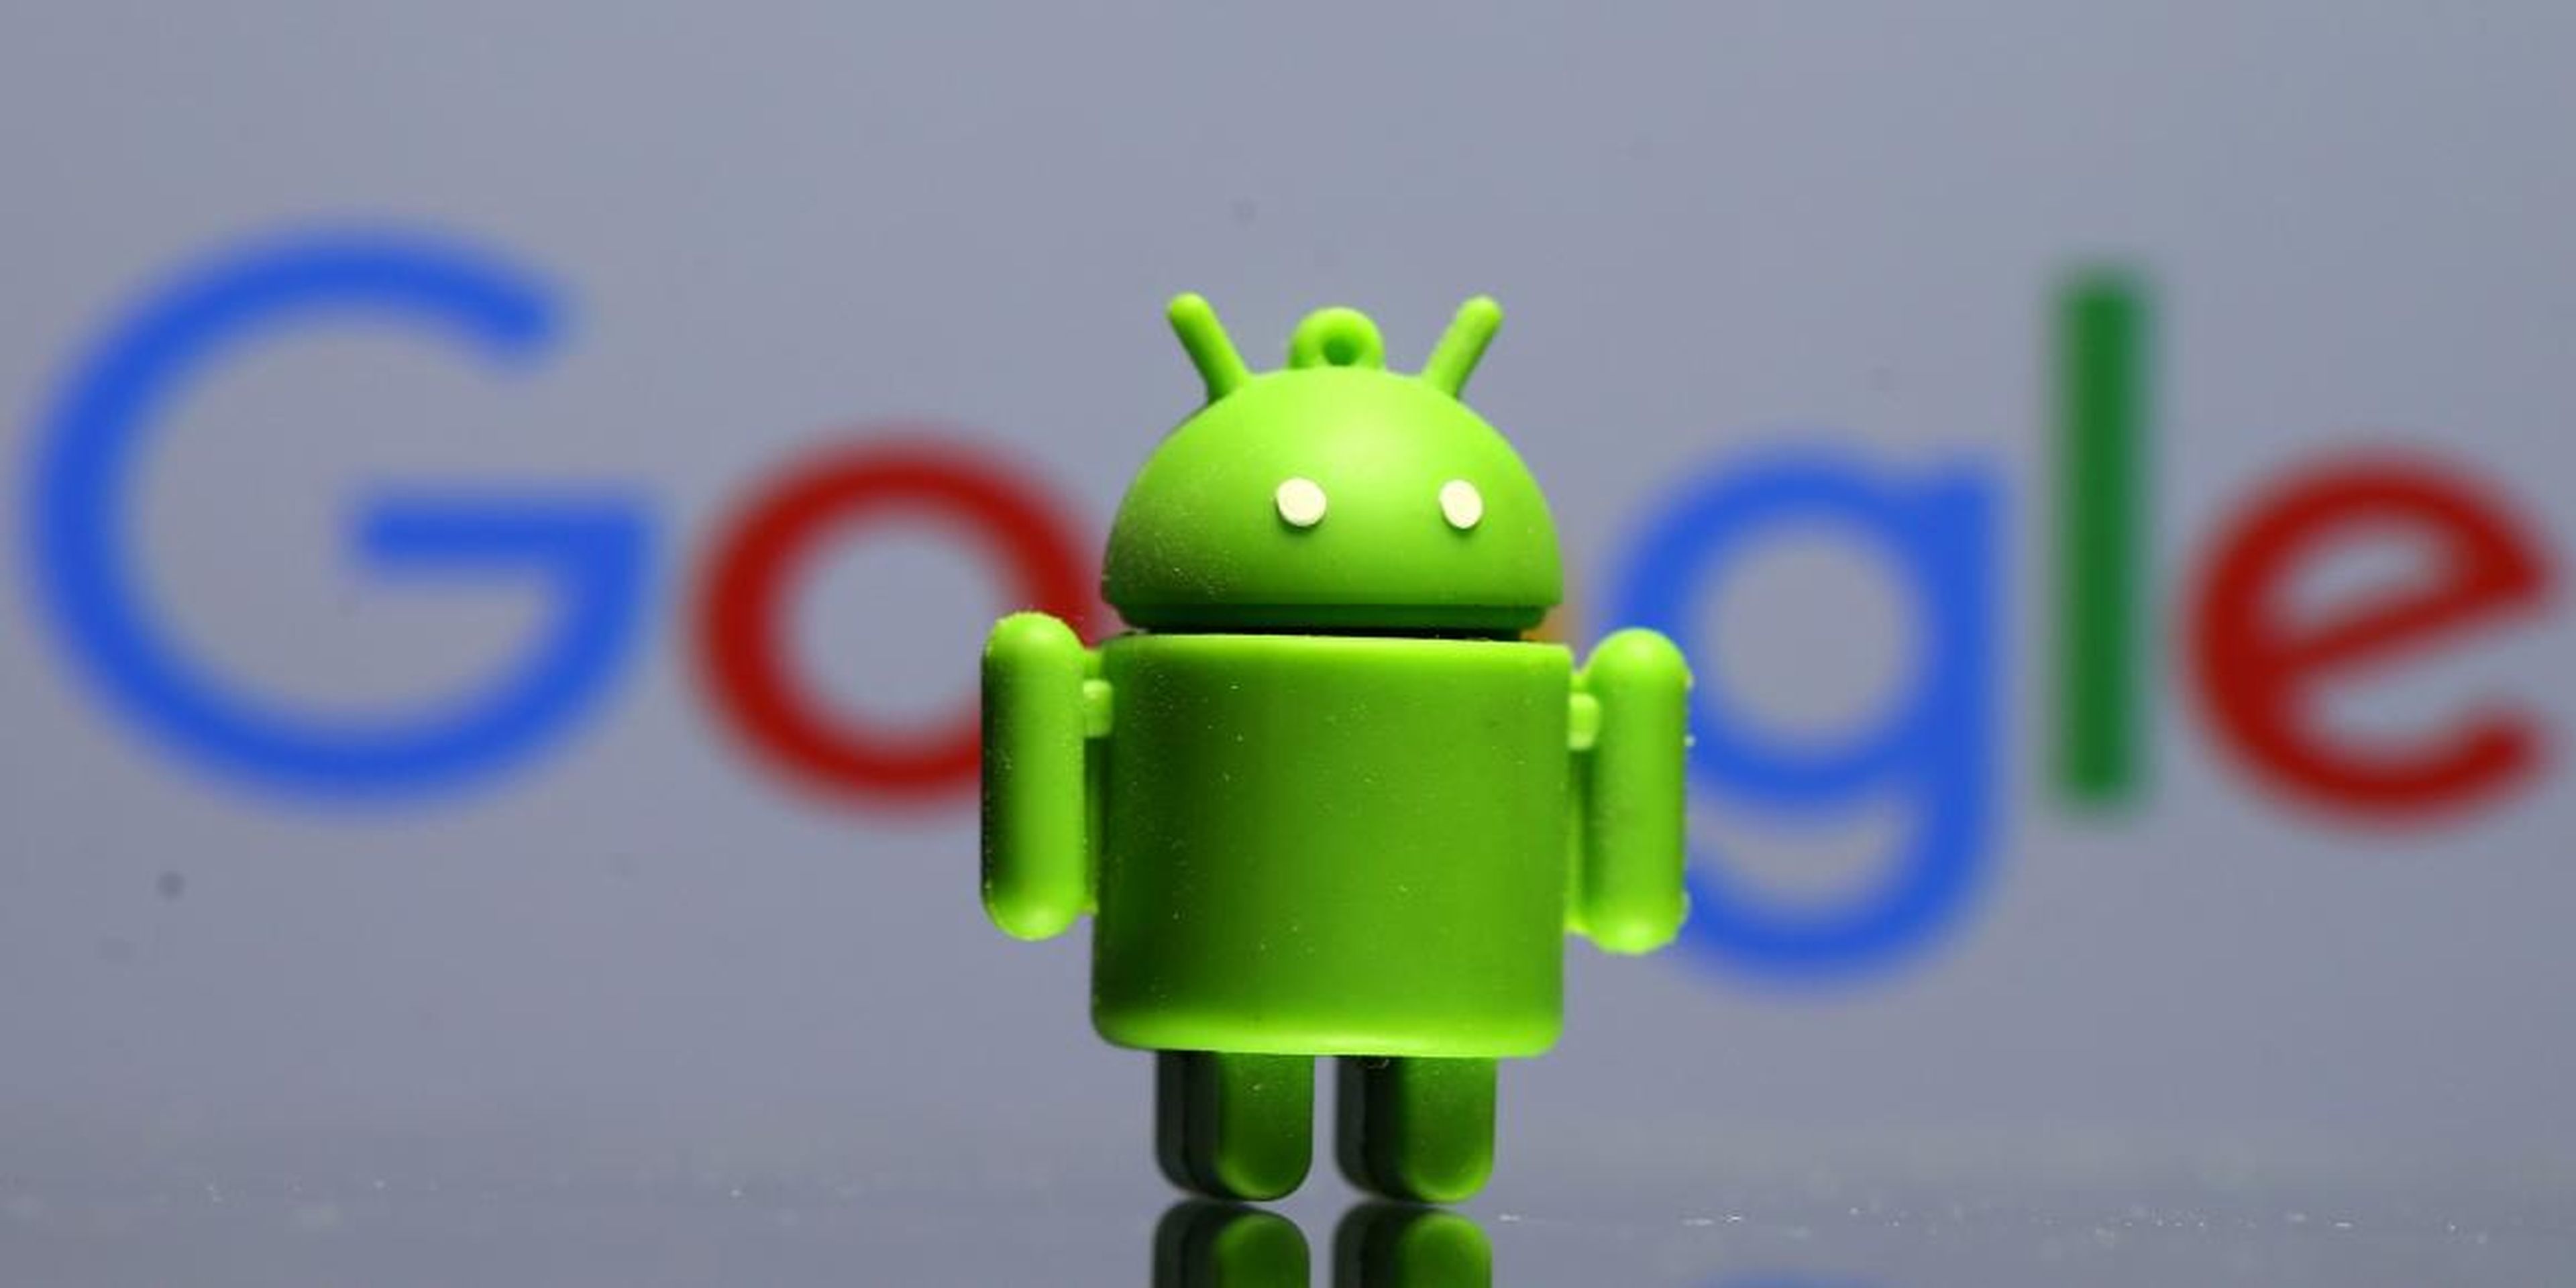 La mascota de Android, Bugdroid, impresa en 3D y frente al logo de Google.